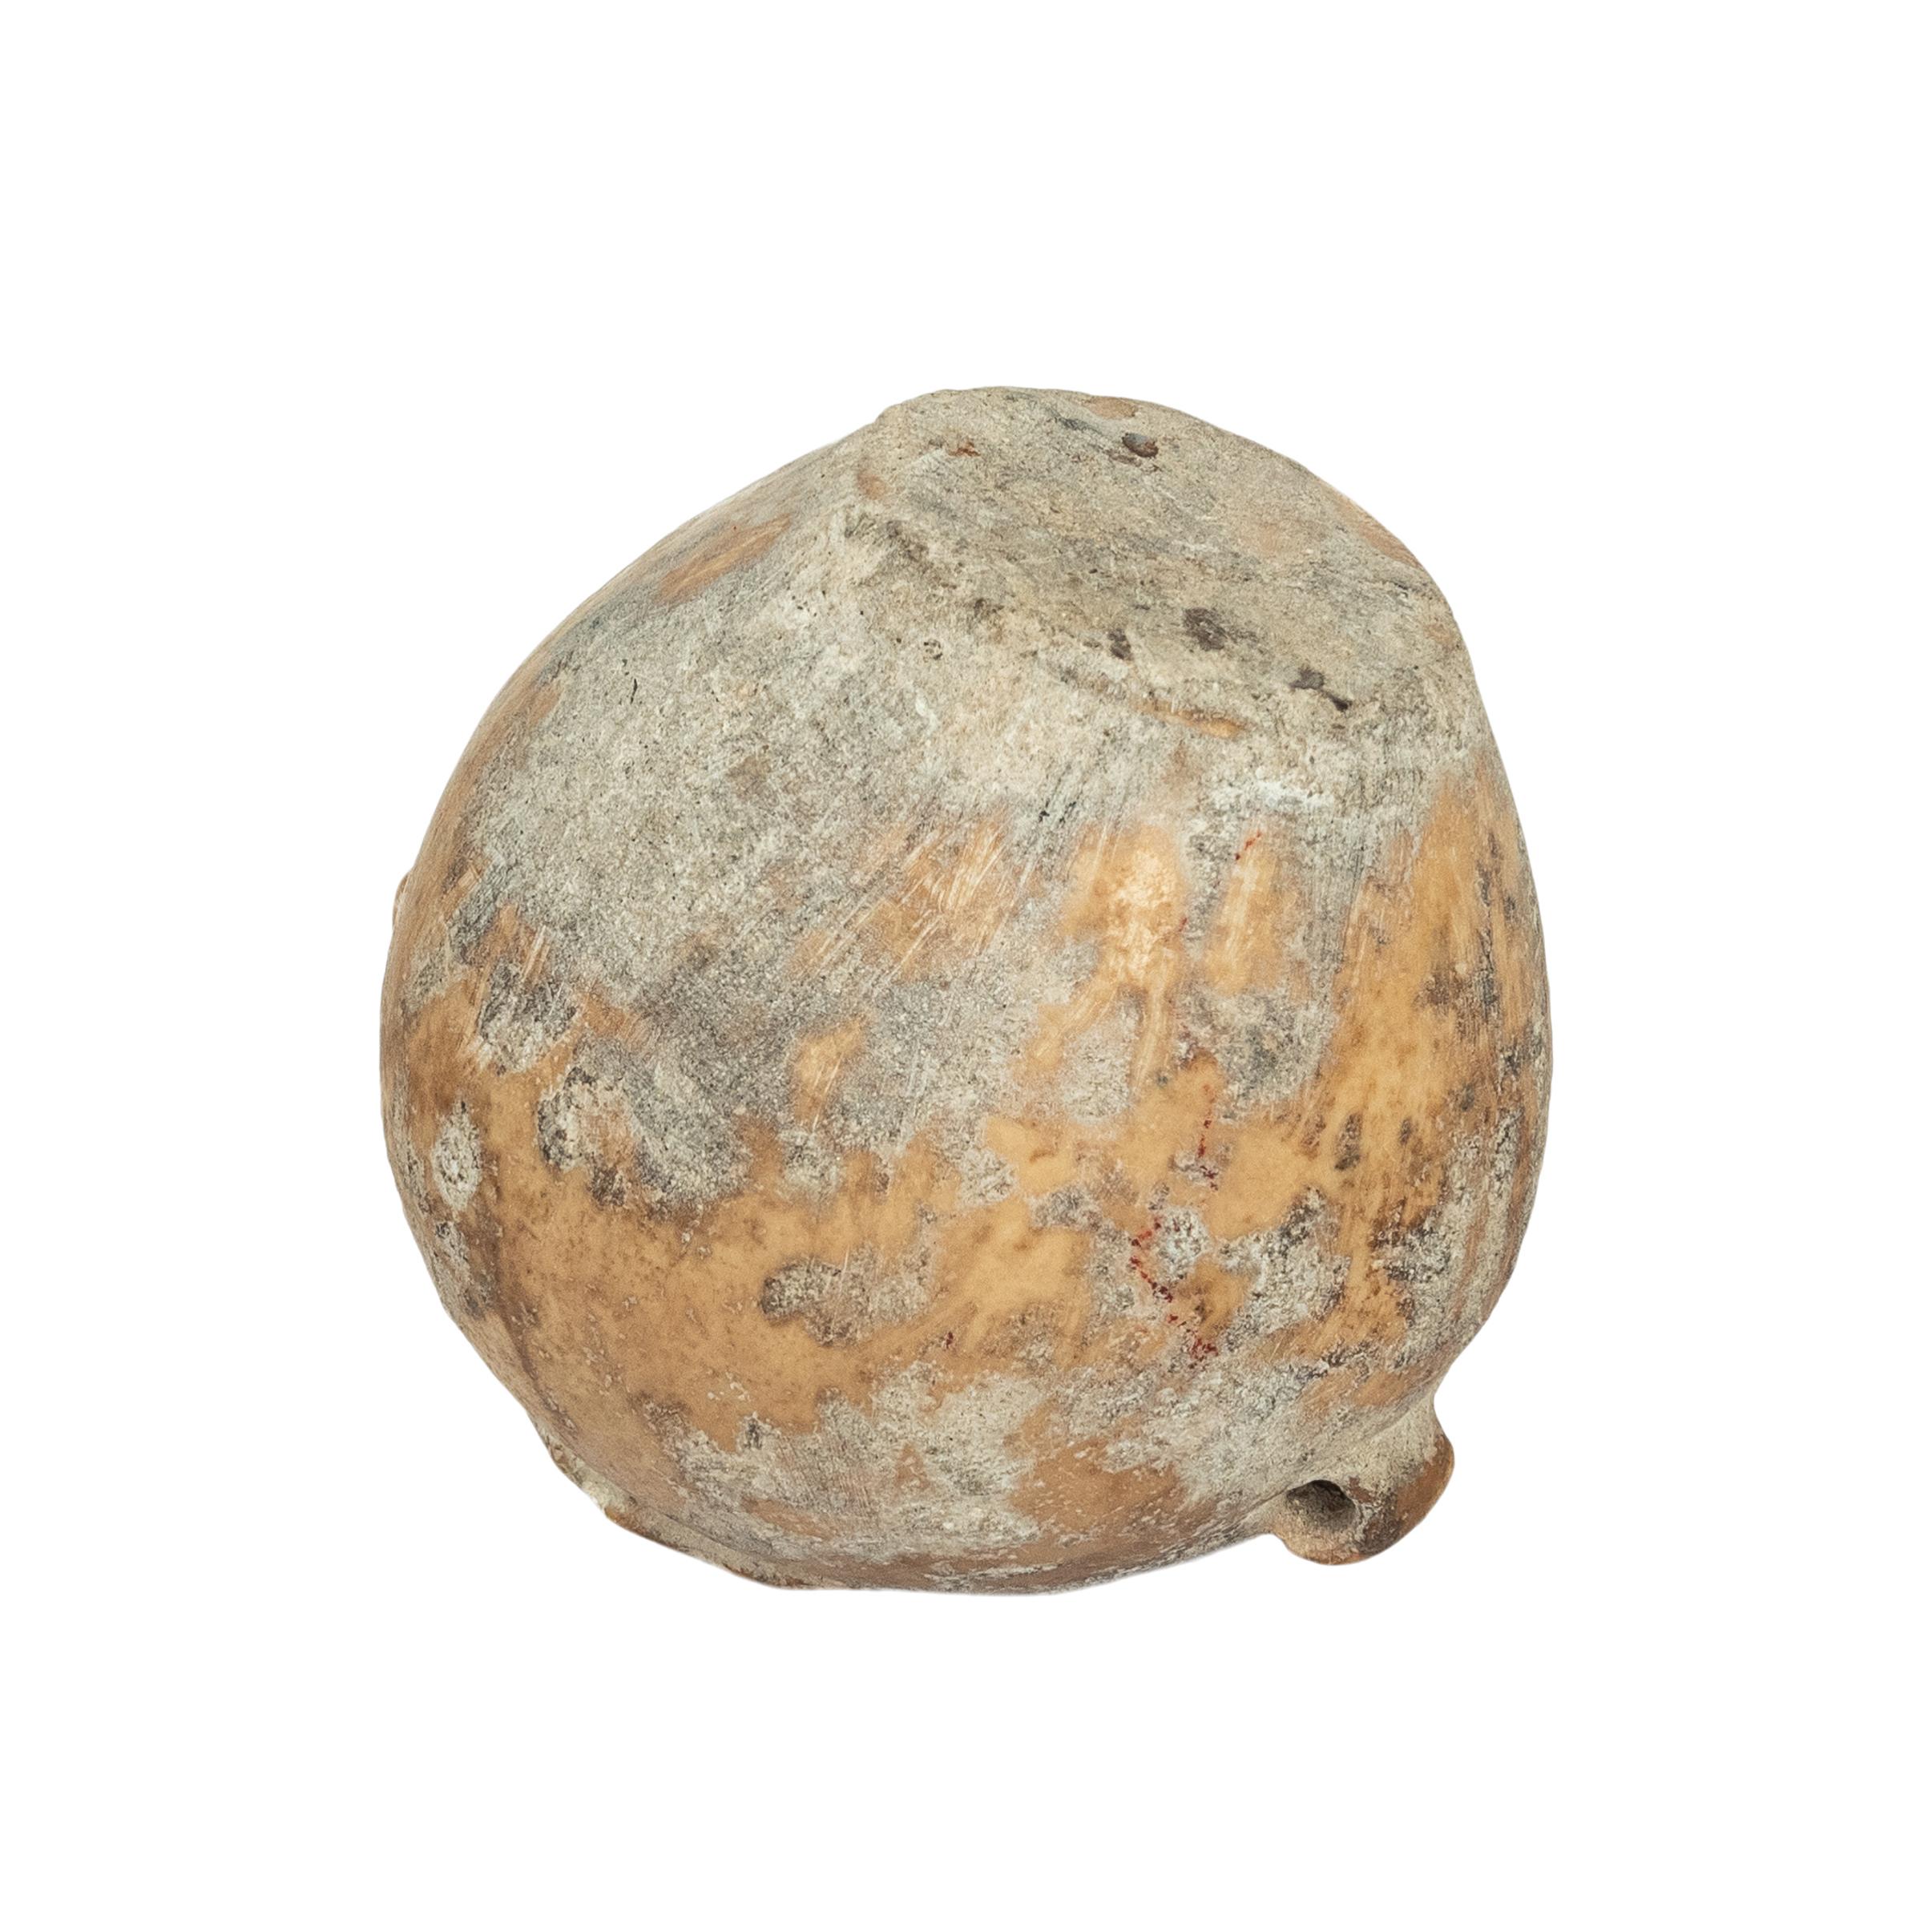 Ancienne Égypte Ancien Empire Miniature A Stone Vessel Jar 2600-2800 BCE 4